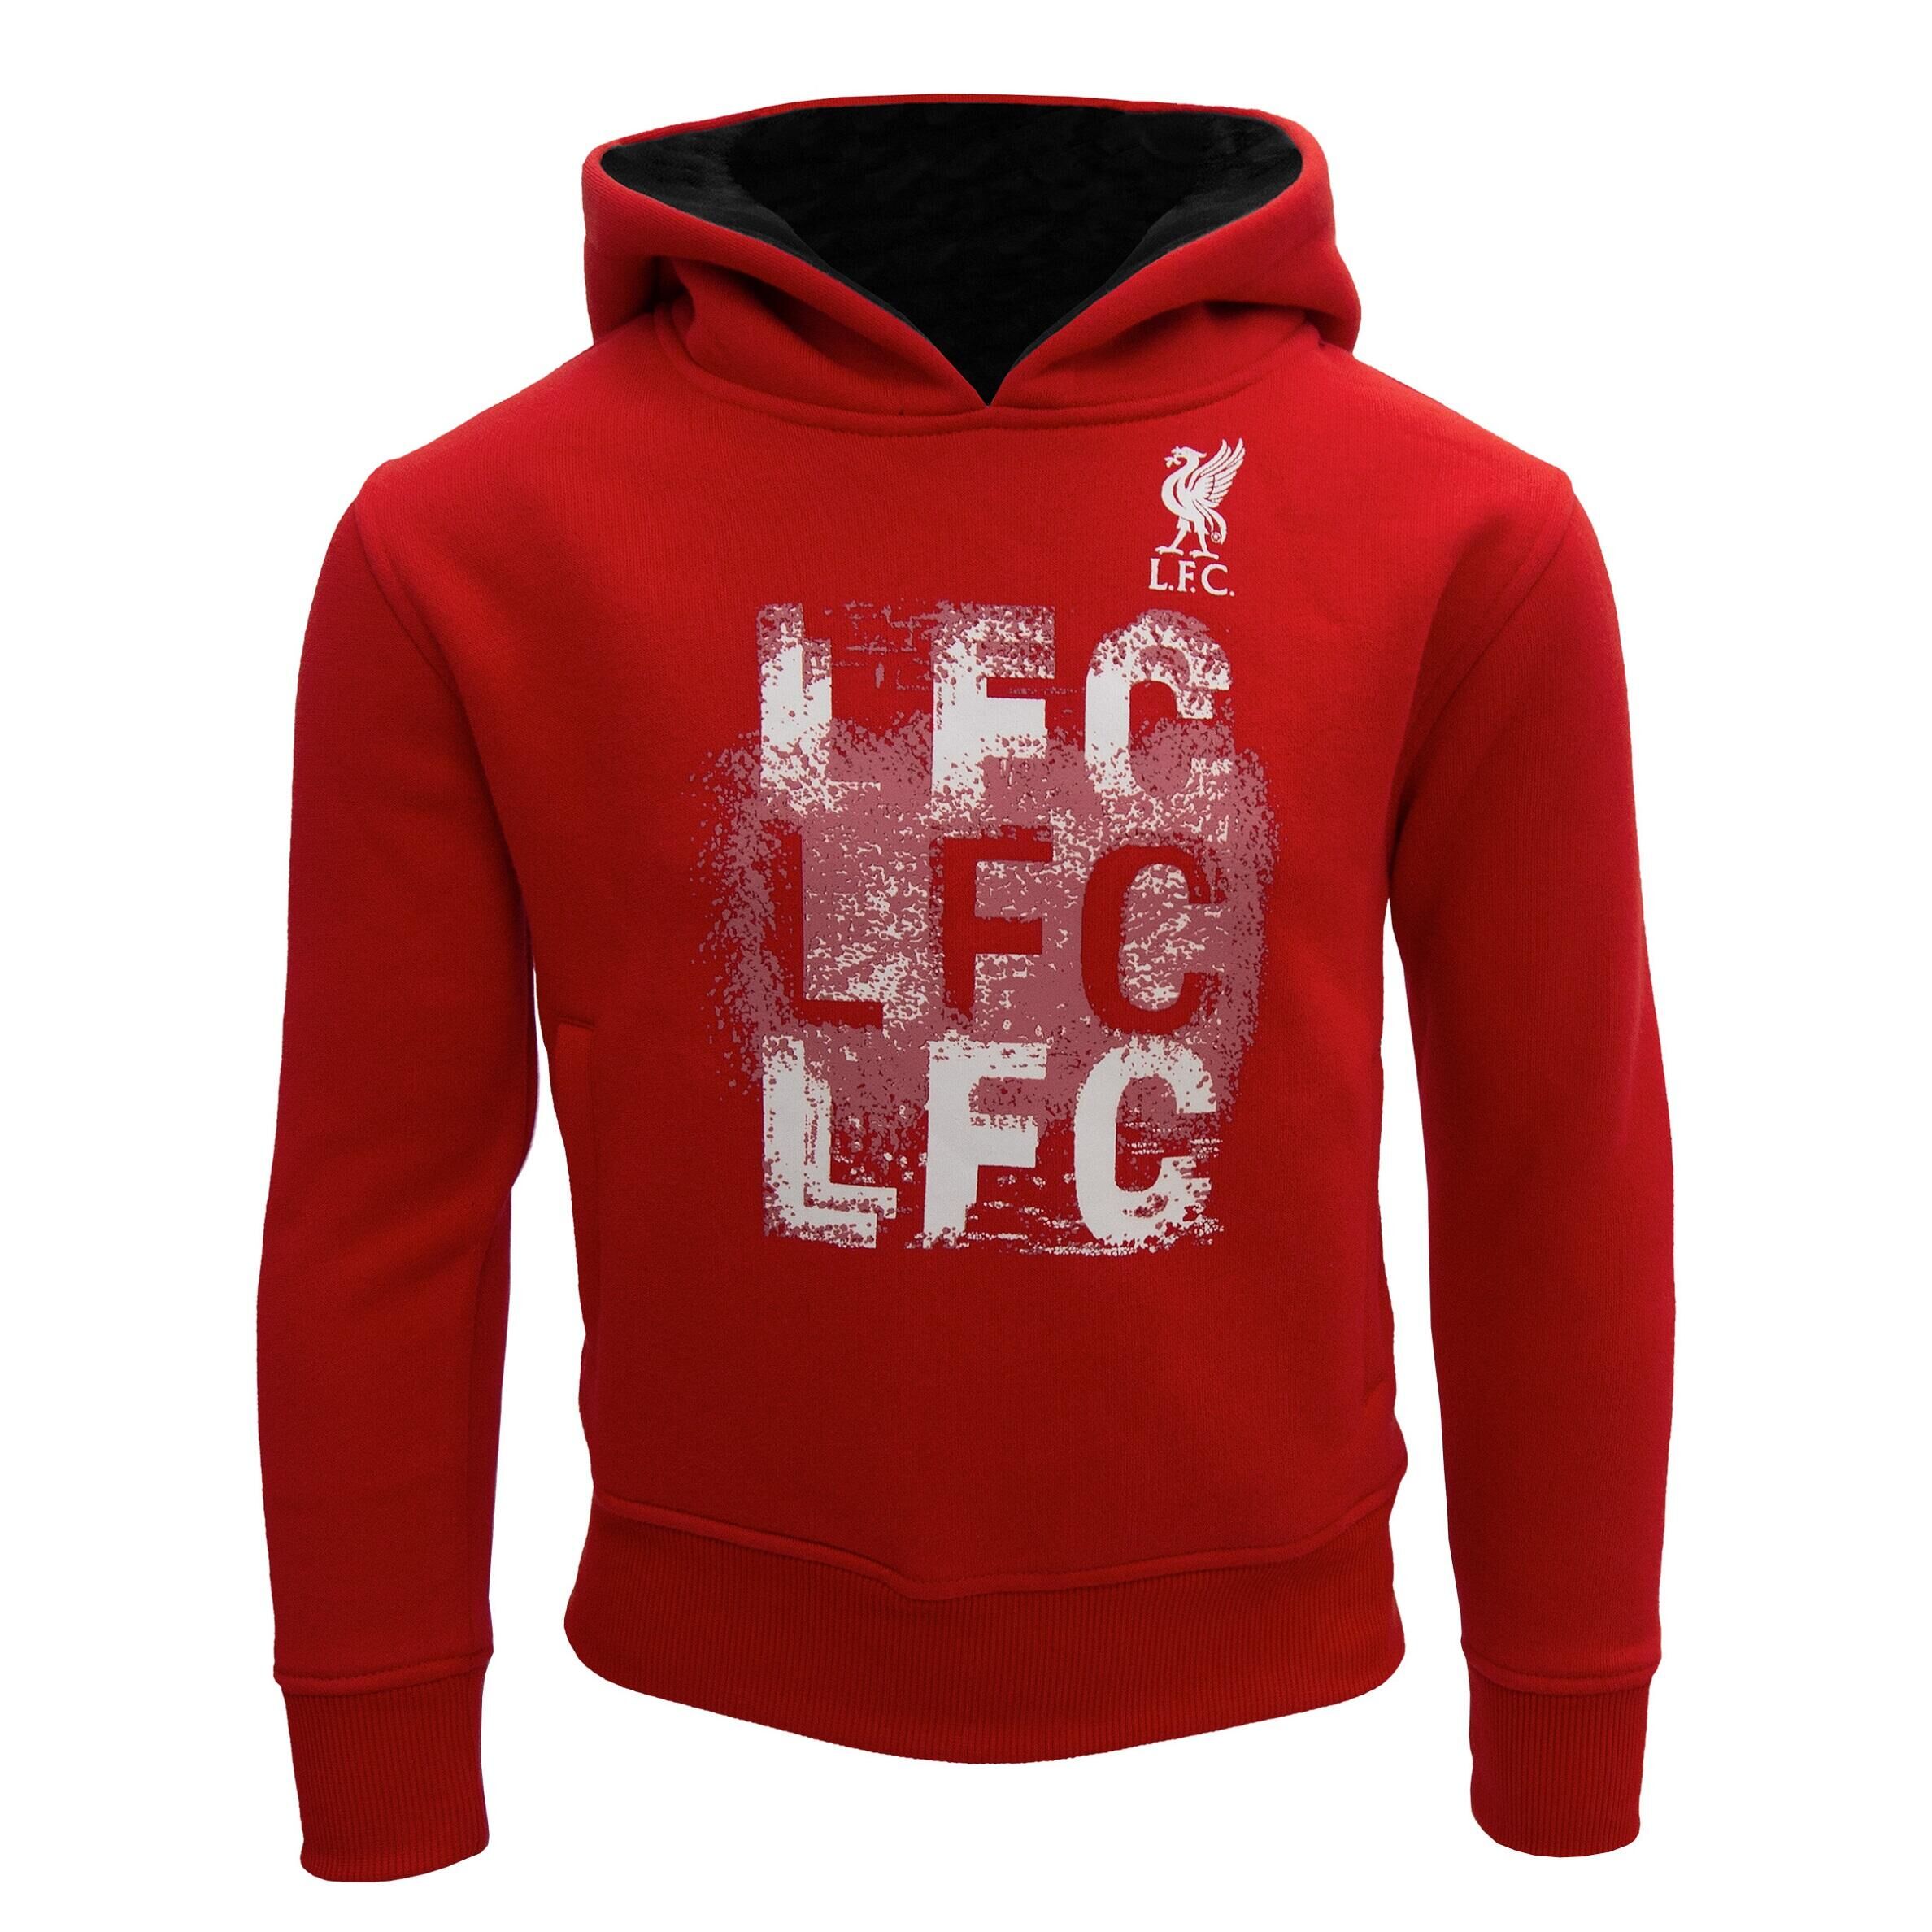 LIVERPOOL FC Liverpool FC Boys Hoody Fleece LFC Graphic OFFICIAL Football Gift